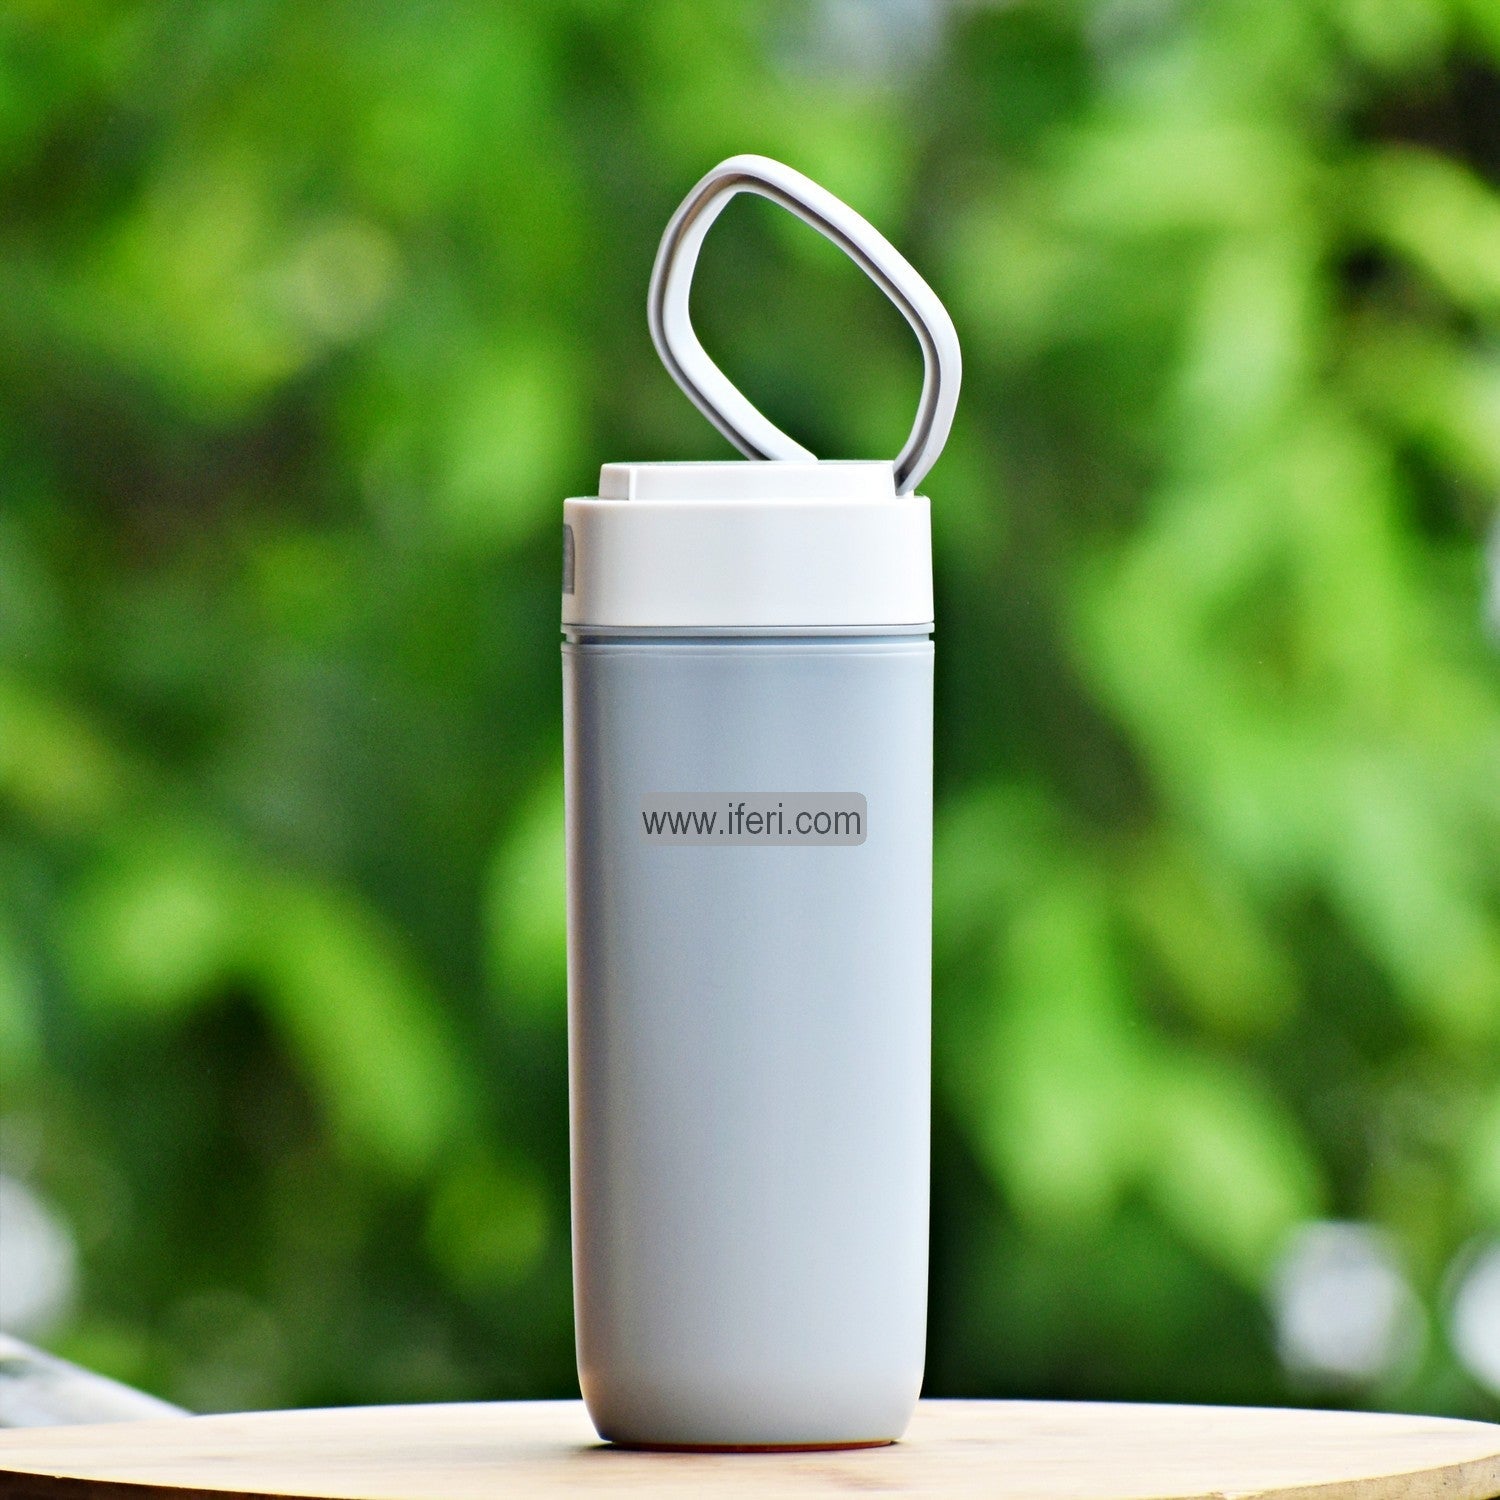 Buy Stainless Steel Insulated Coffee Mug Tumbler Vacuum Flask through online from iferi.com.